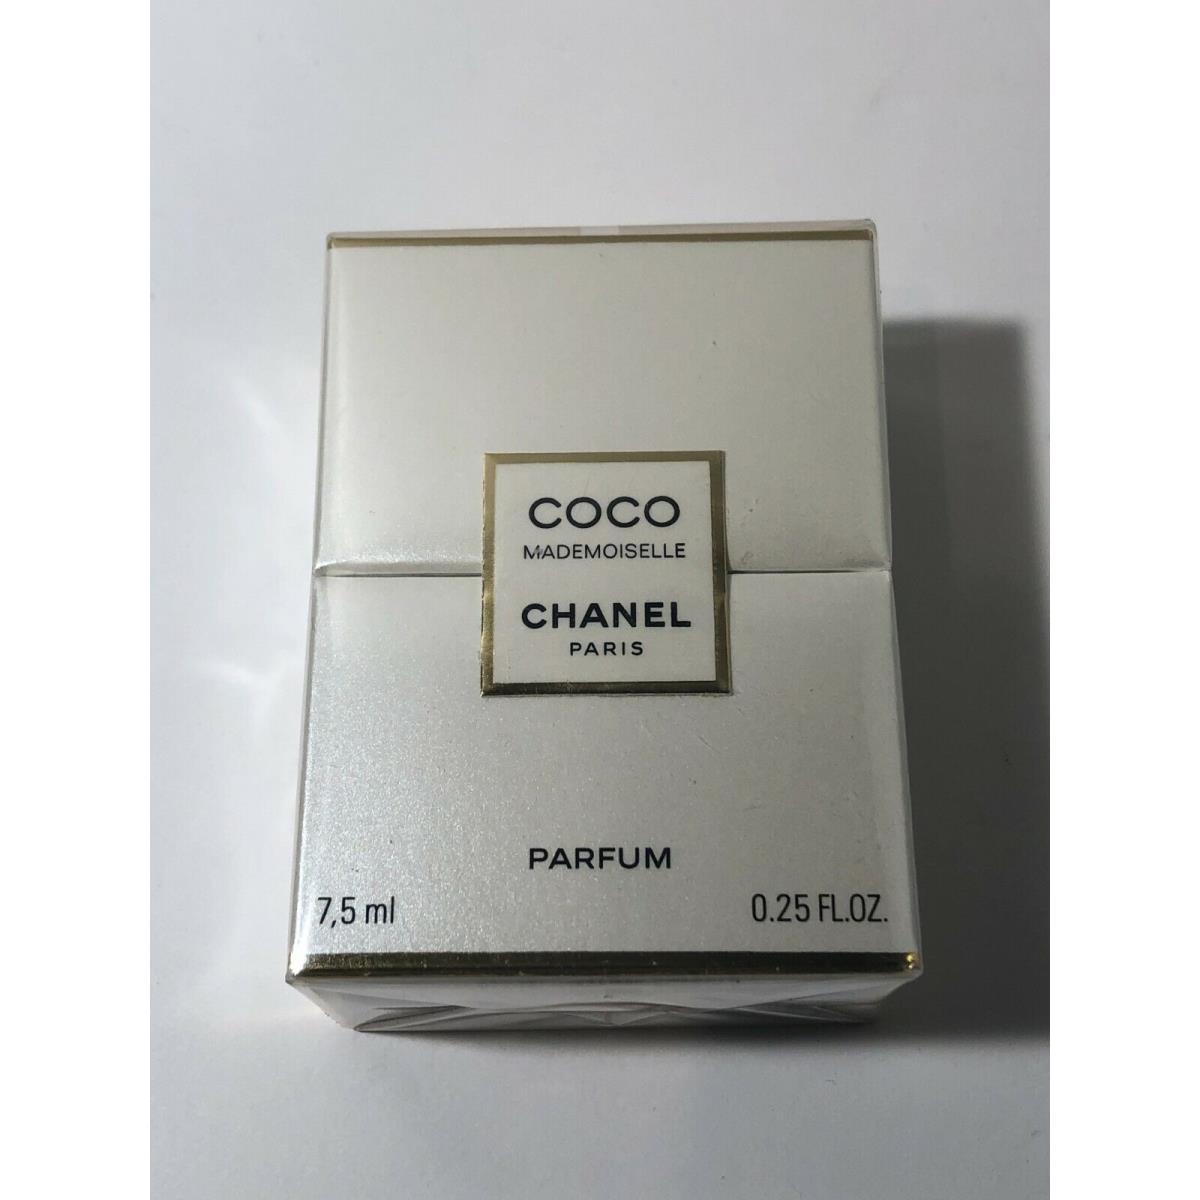 Chanel Coco Mademoiselle Parfum / Pure Perfume 0.25 oz